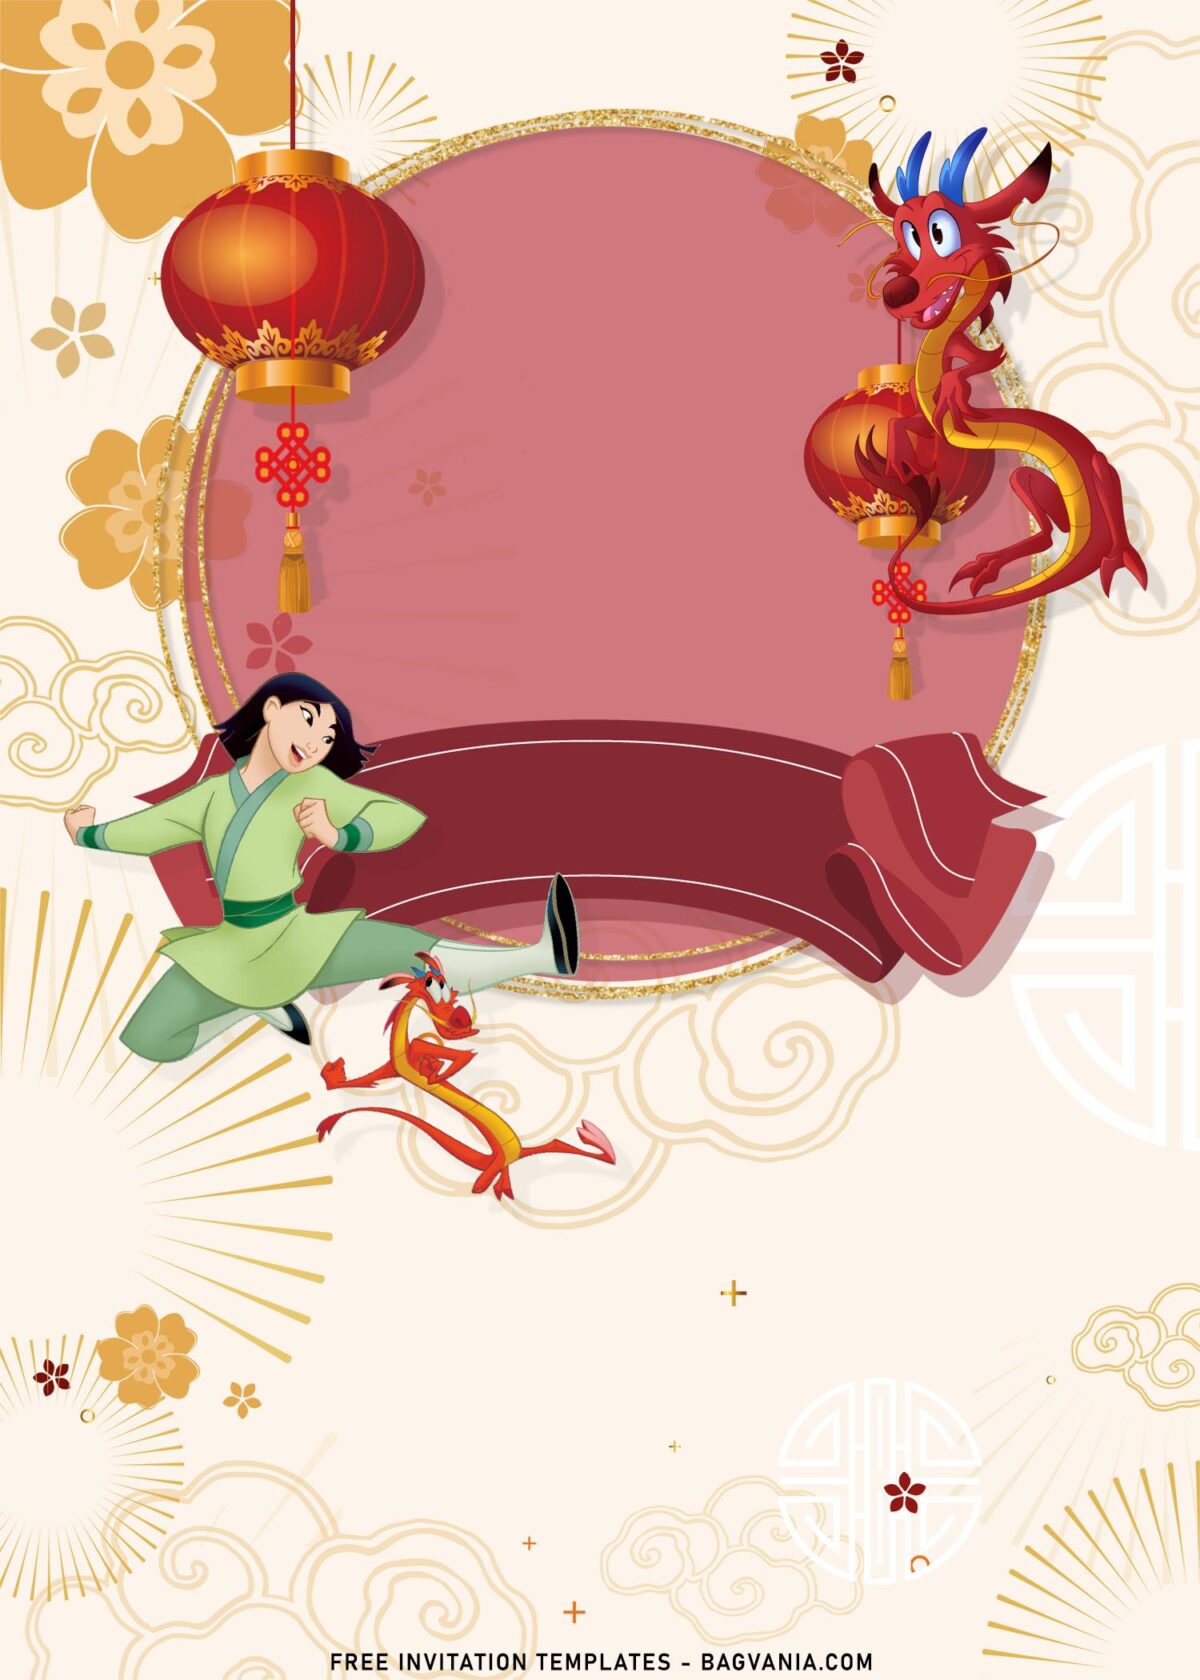 8+ Princess Mulan Birthday Invitation Templates with Mushu the Red Dragon